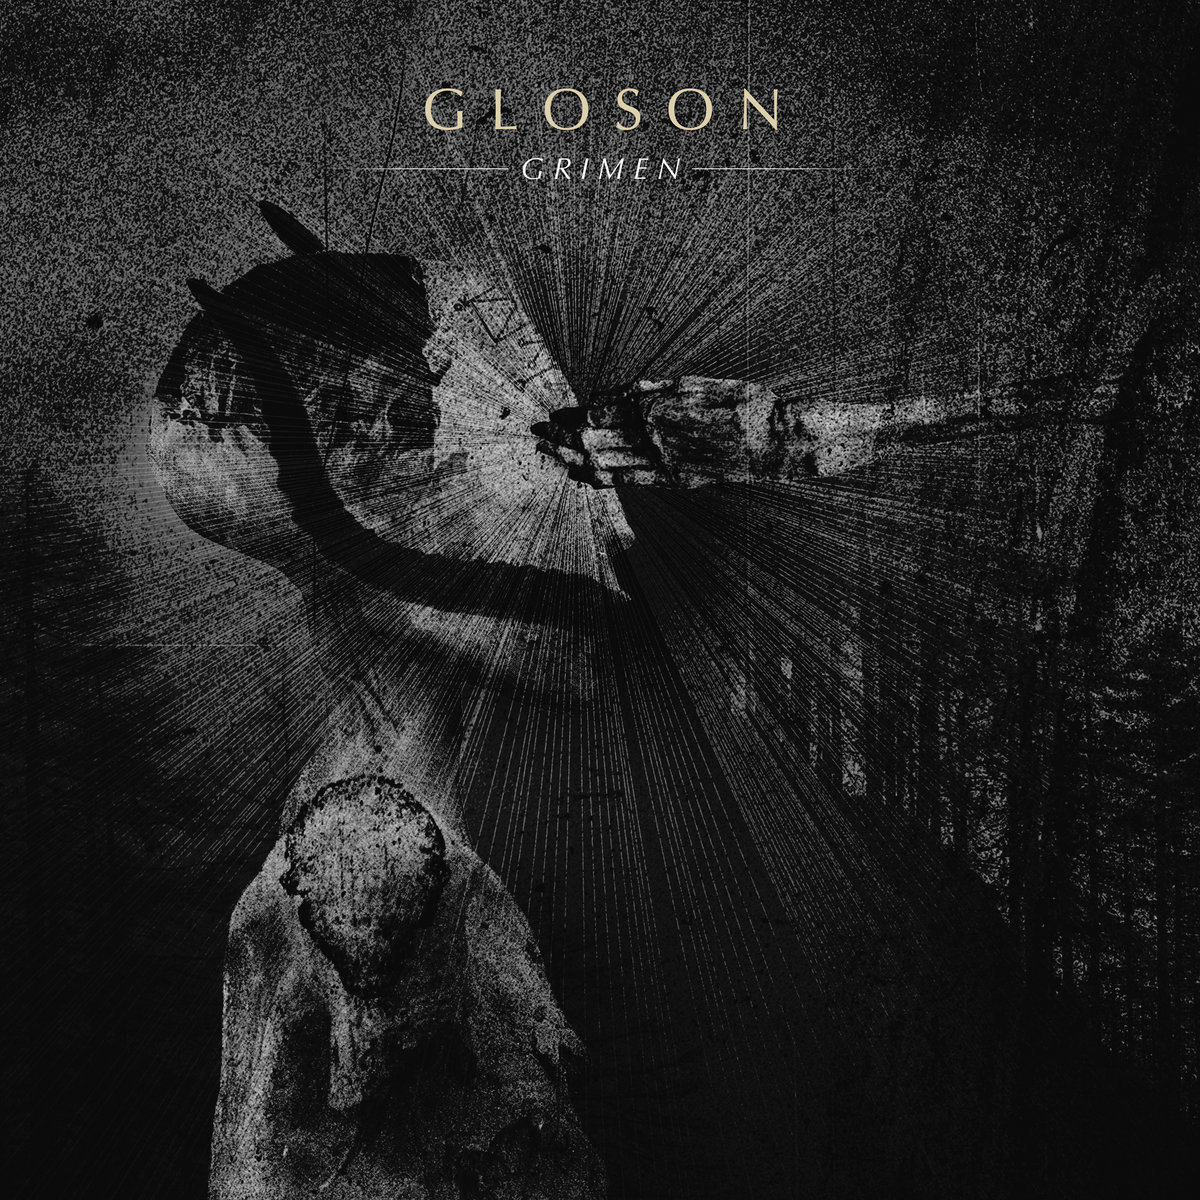 Gloson – Grimen